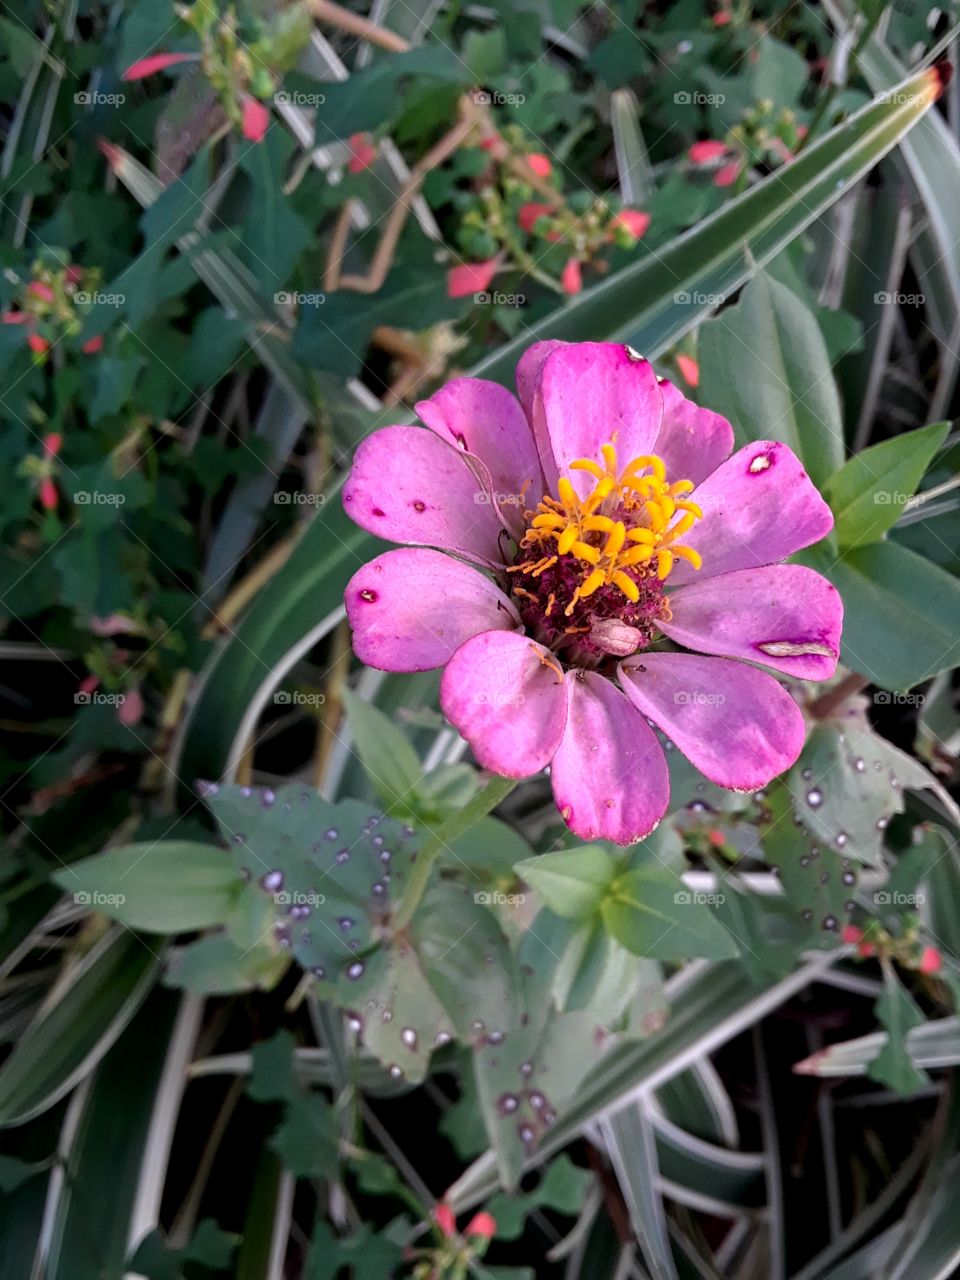 dainty pink flower